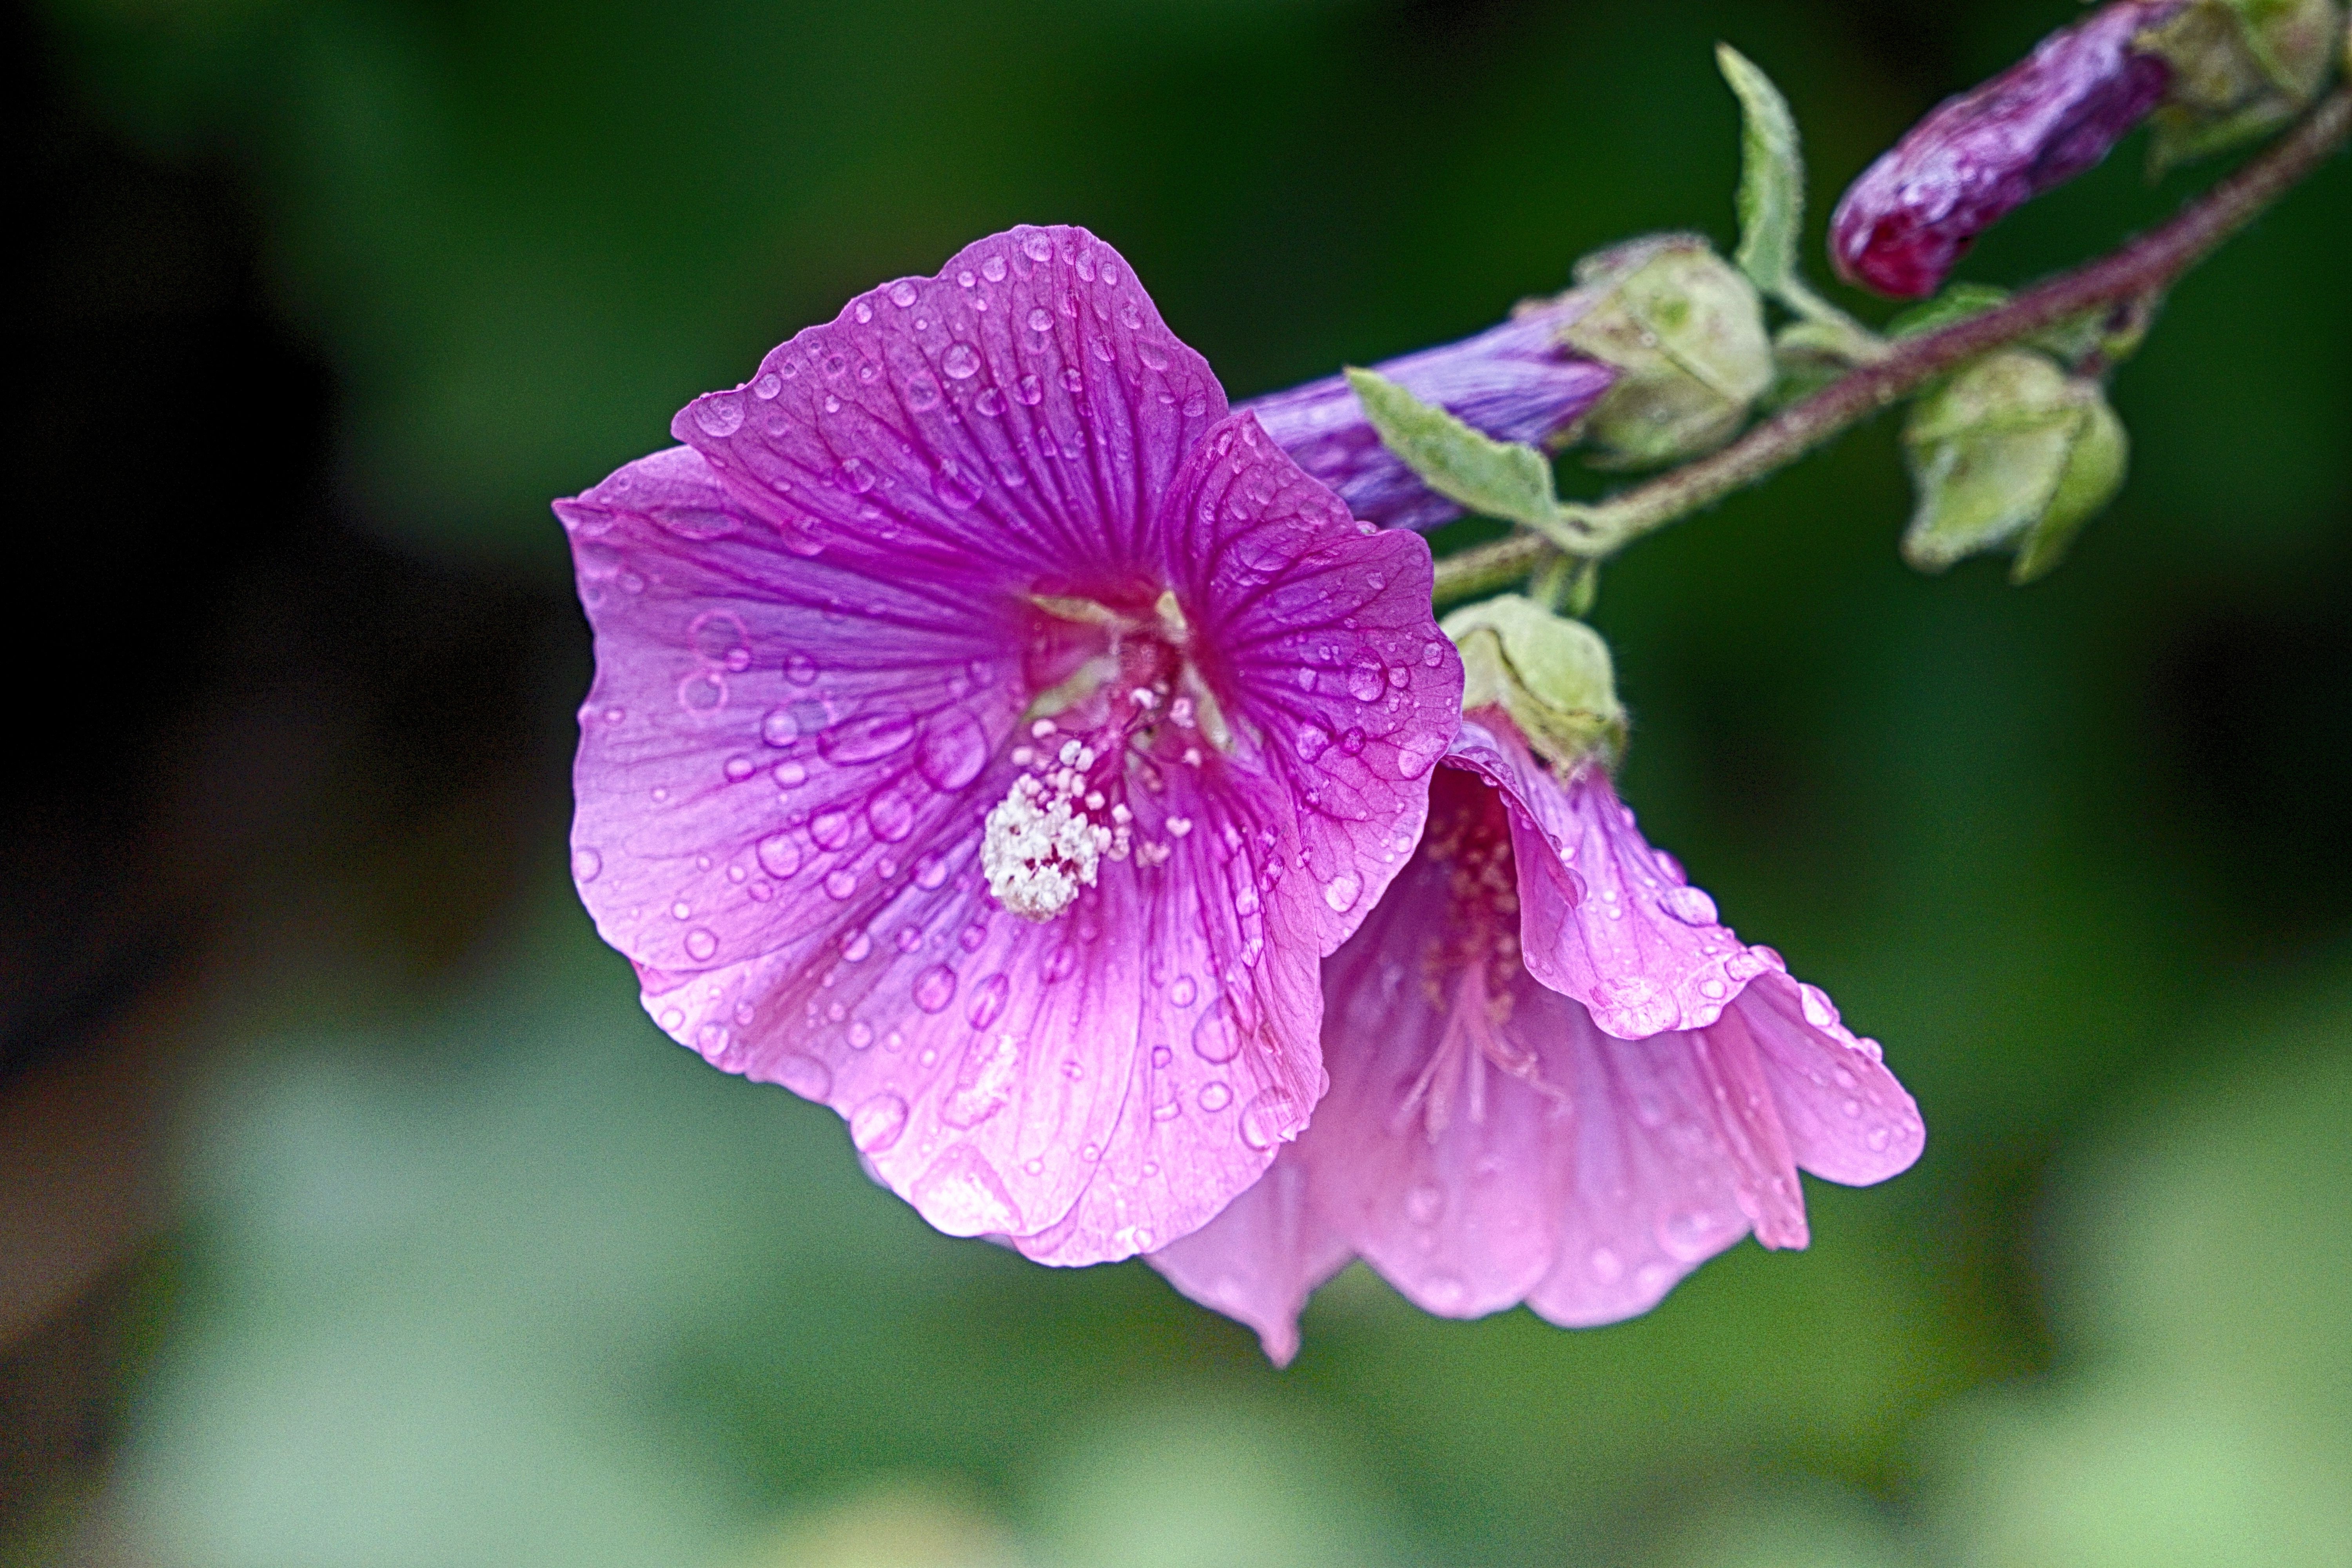 purple flower plant